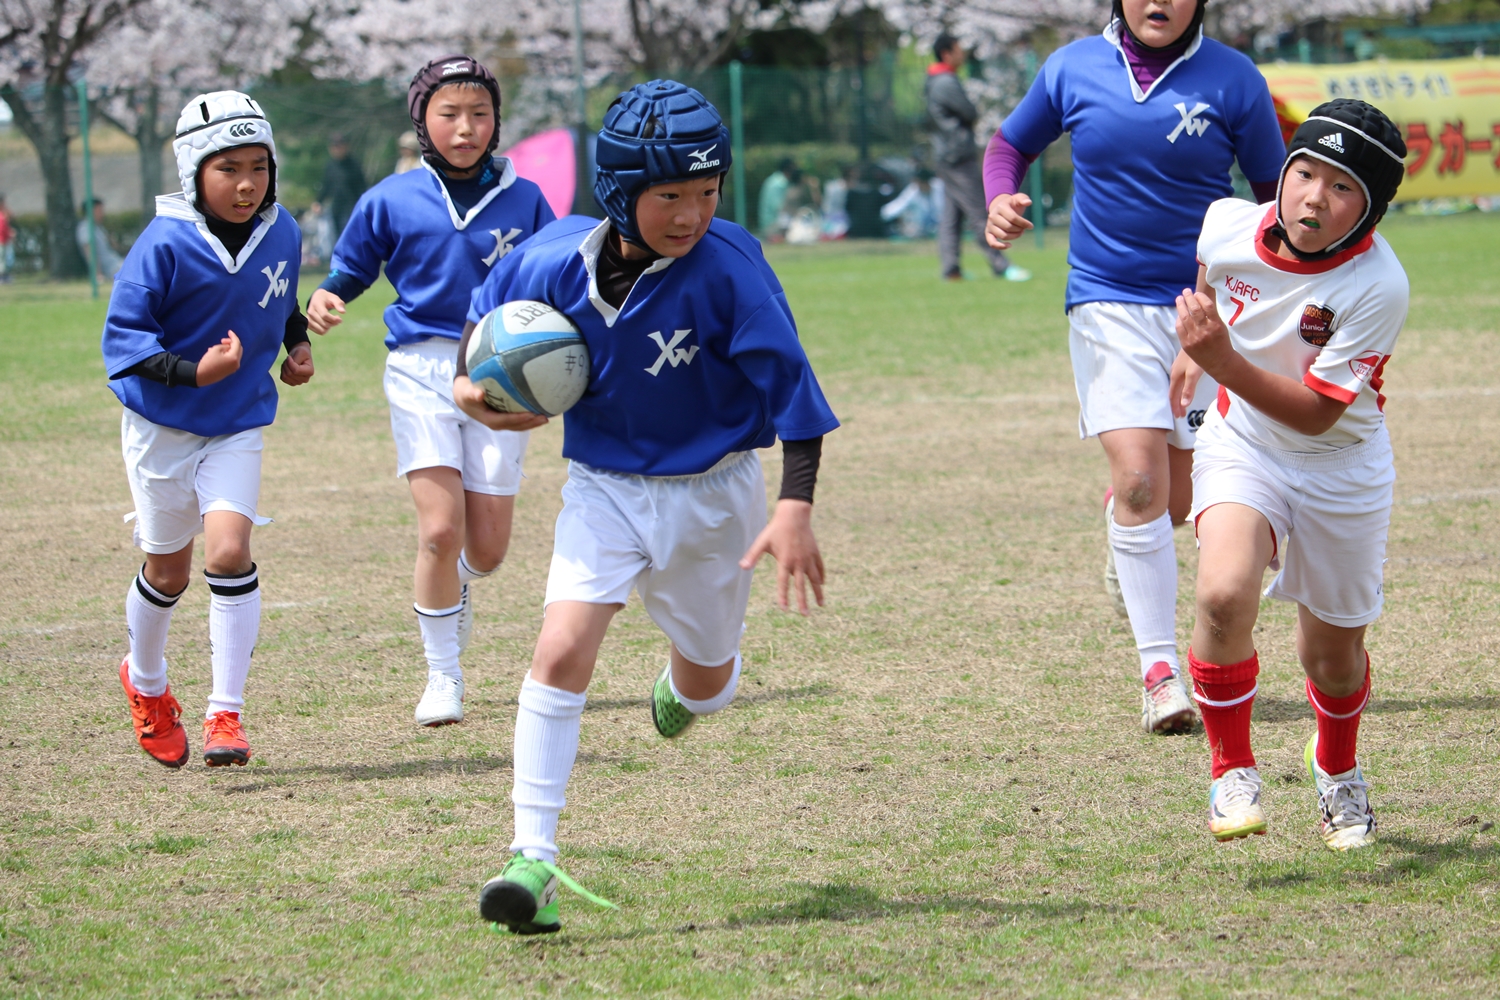 youngwave_kitakyusyu_rugby_school_kasugahai2016050.JPG